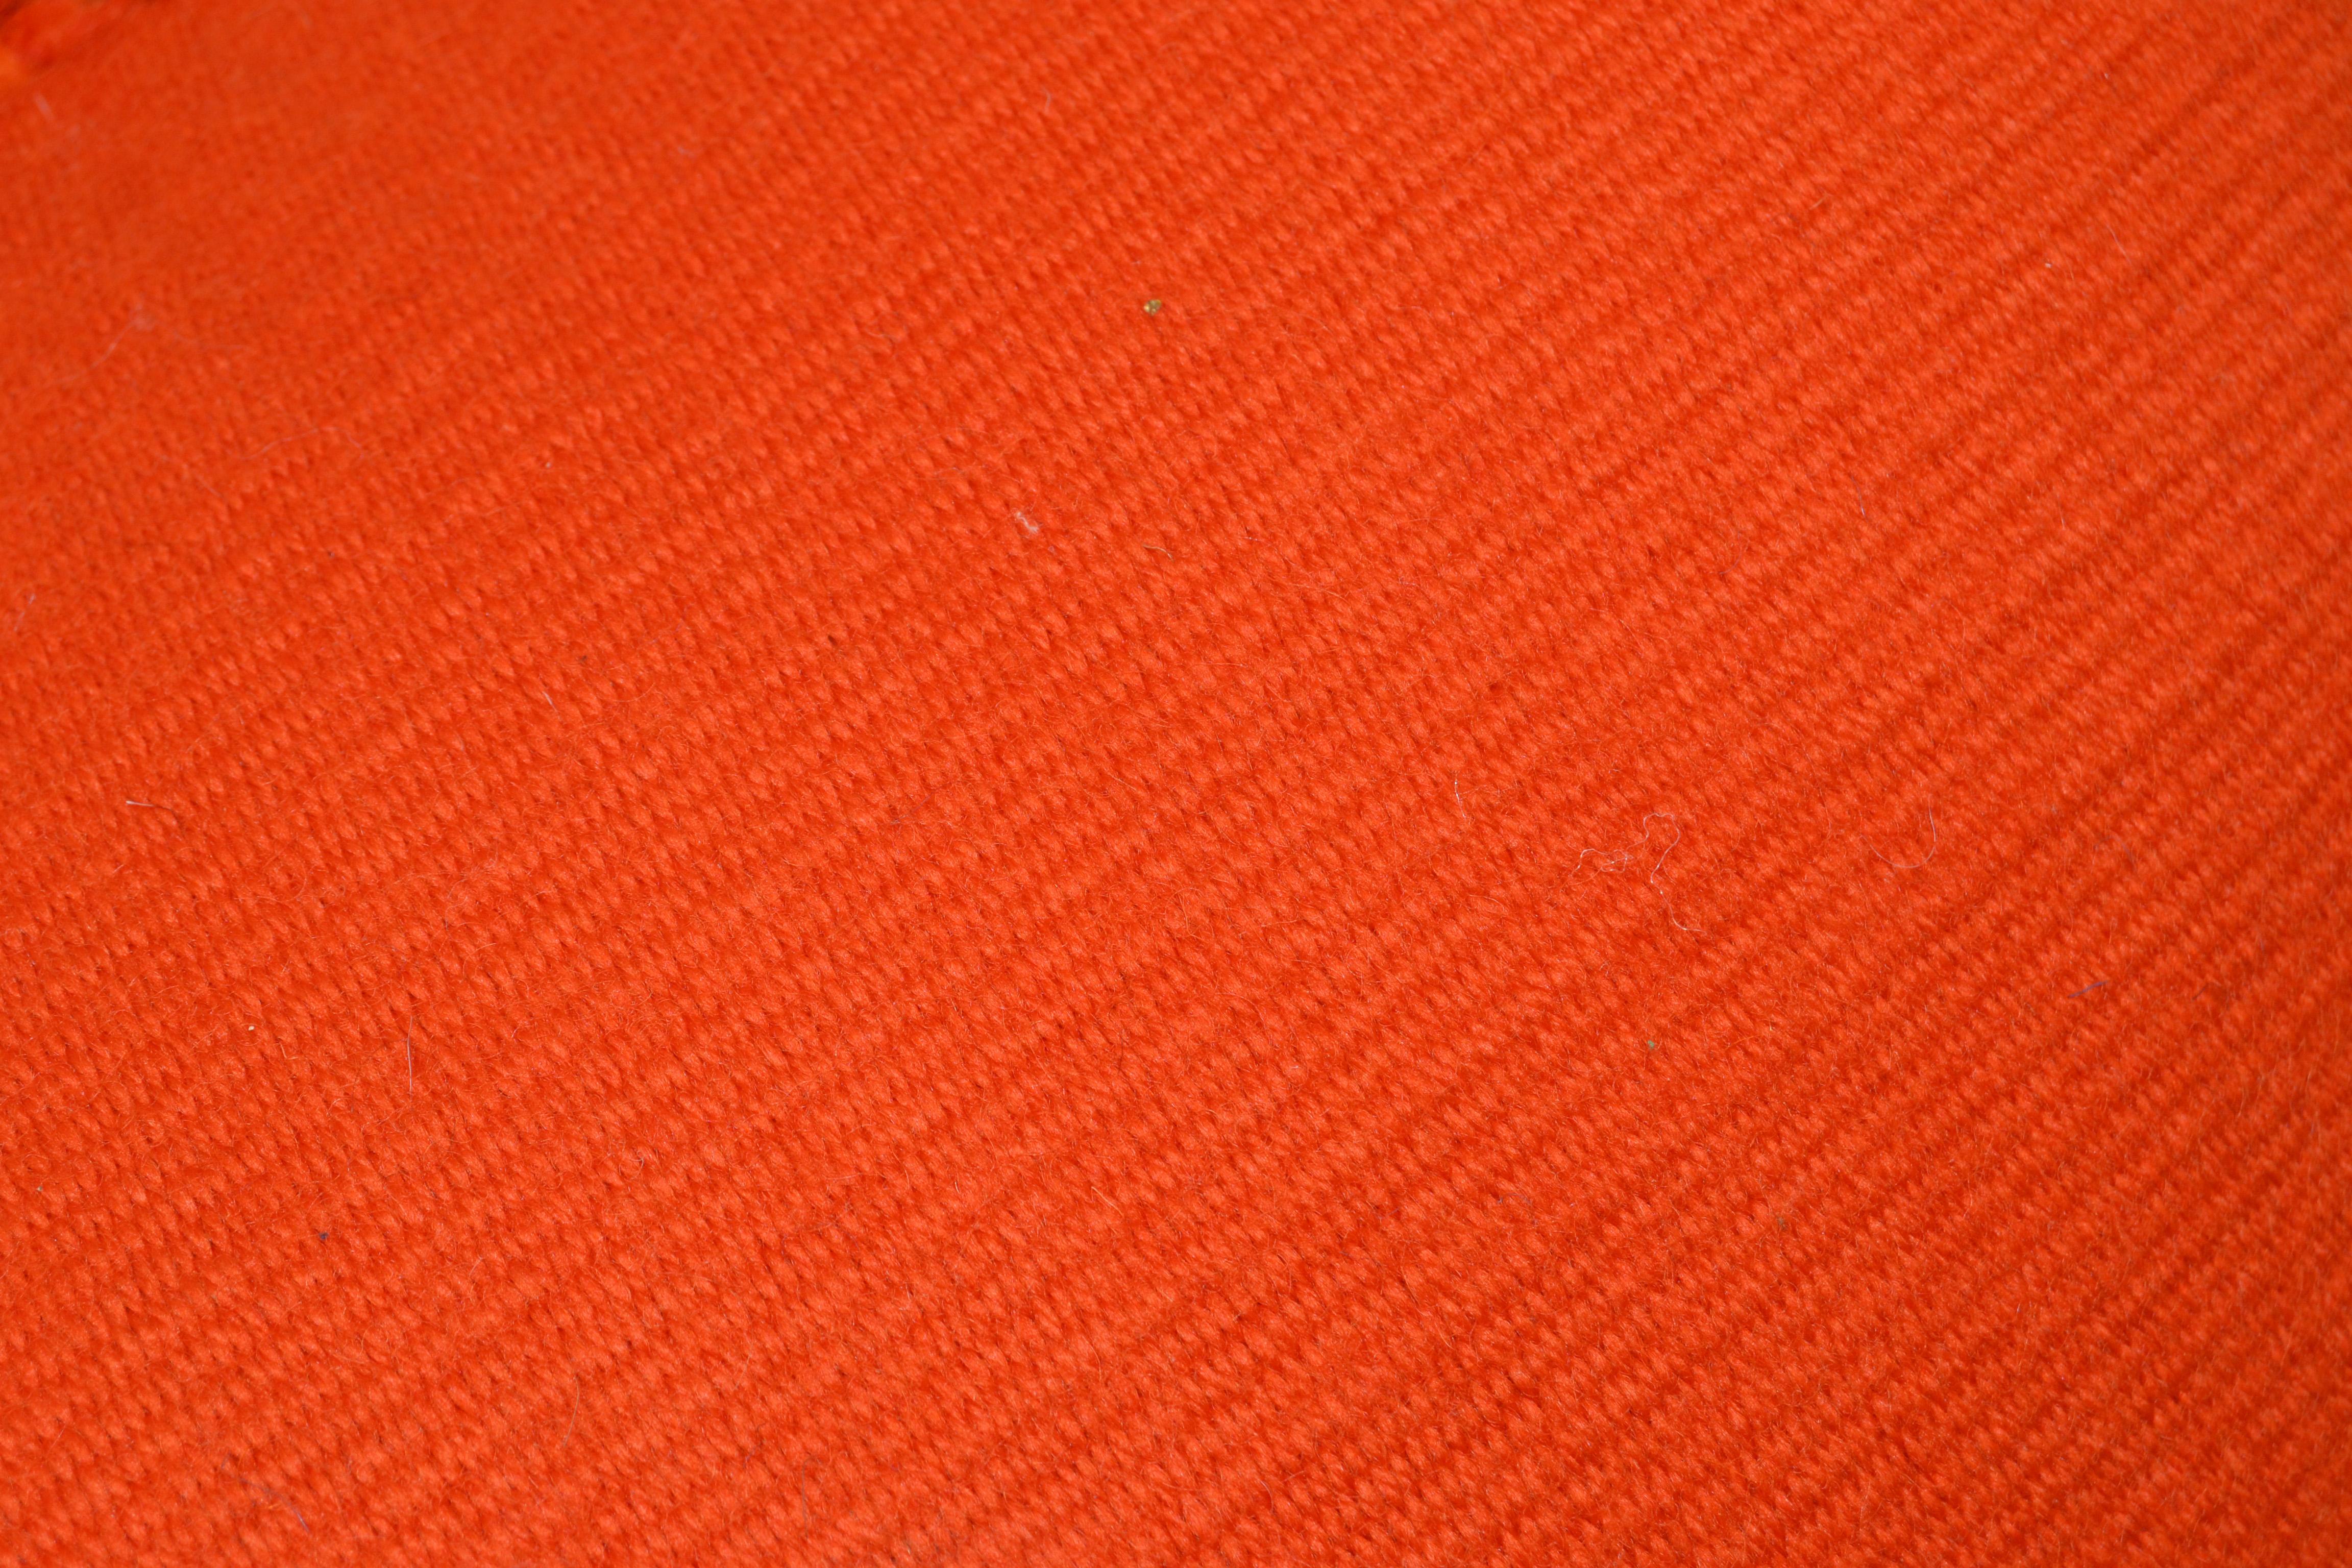 Metal Jonathan Adler Orange Flair Primaloft Down-Filled Pillows Mid-Century Modern Set For Sale